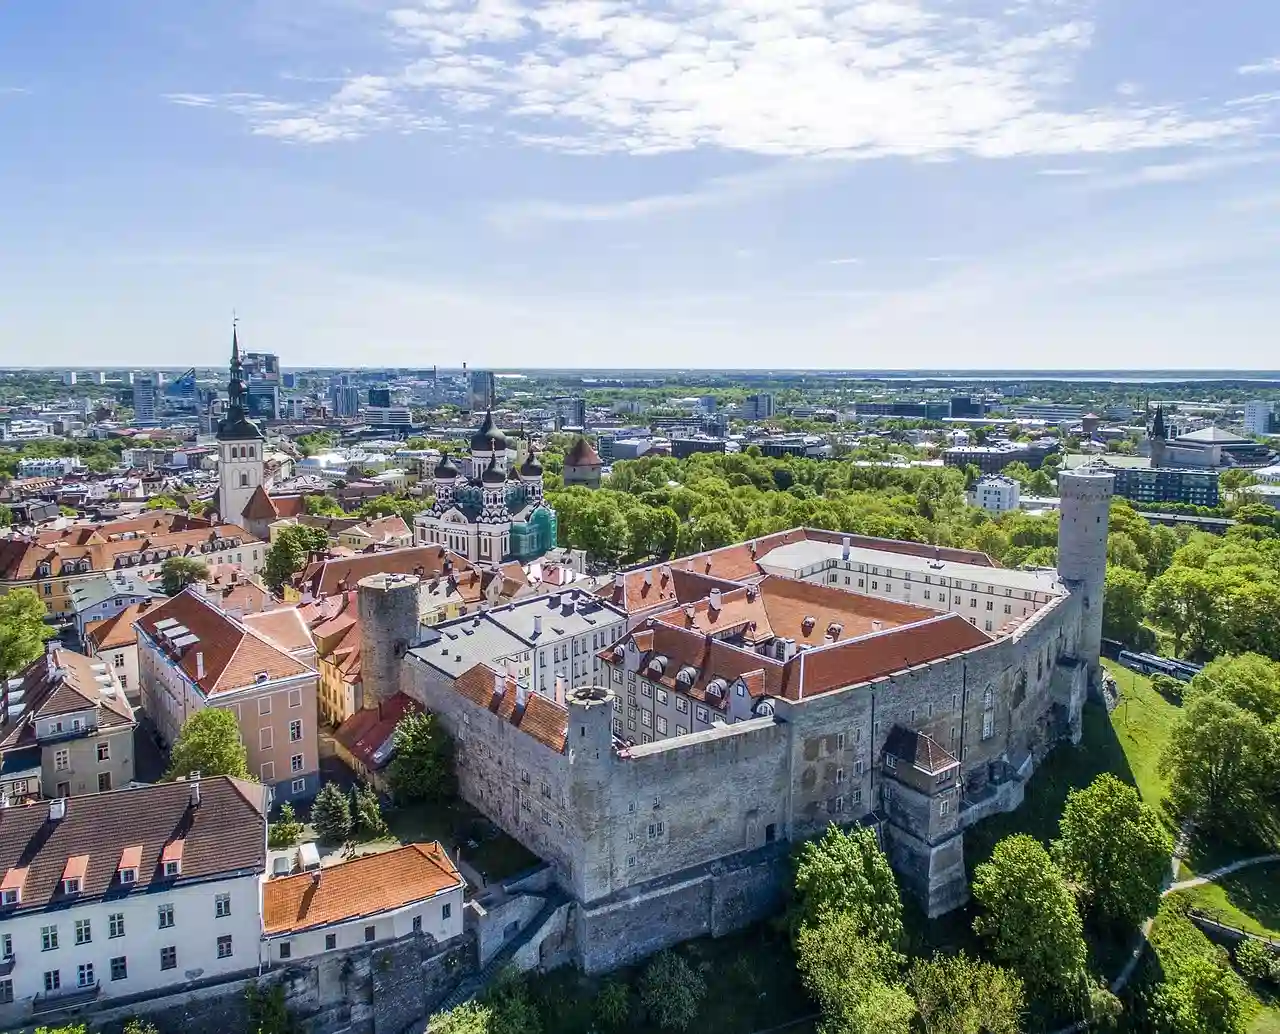 Day 10 - Tallinn